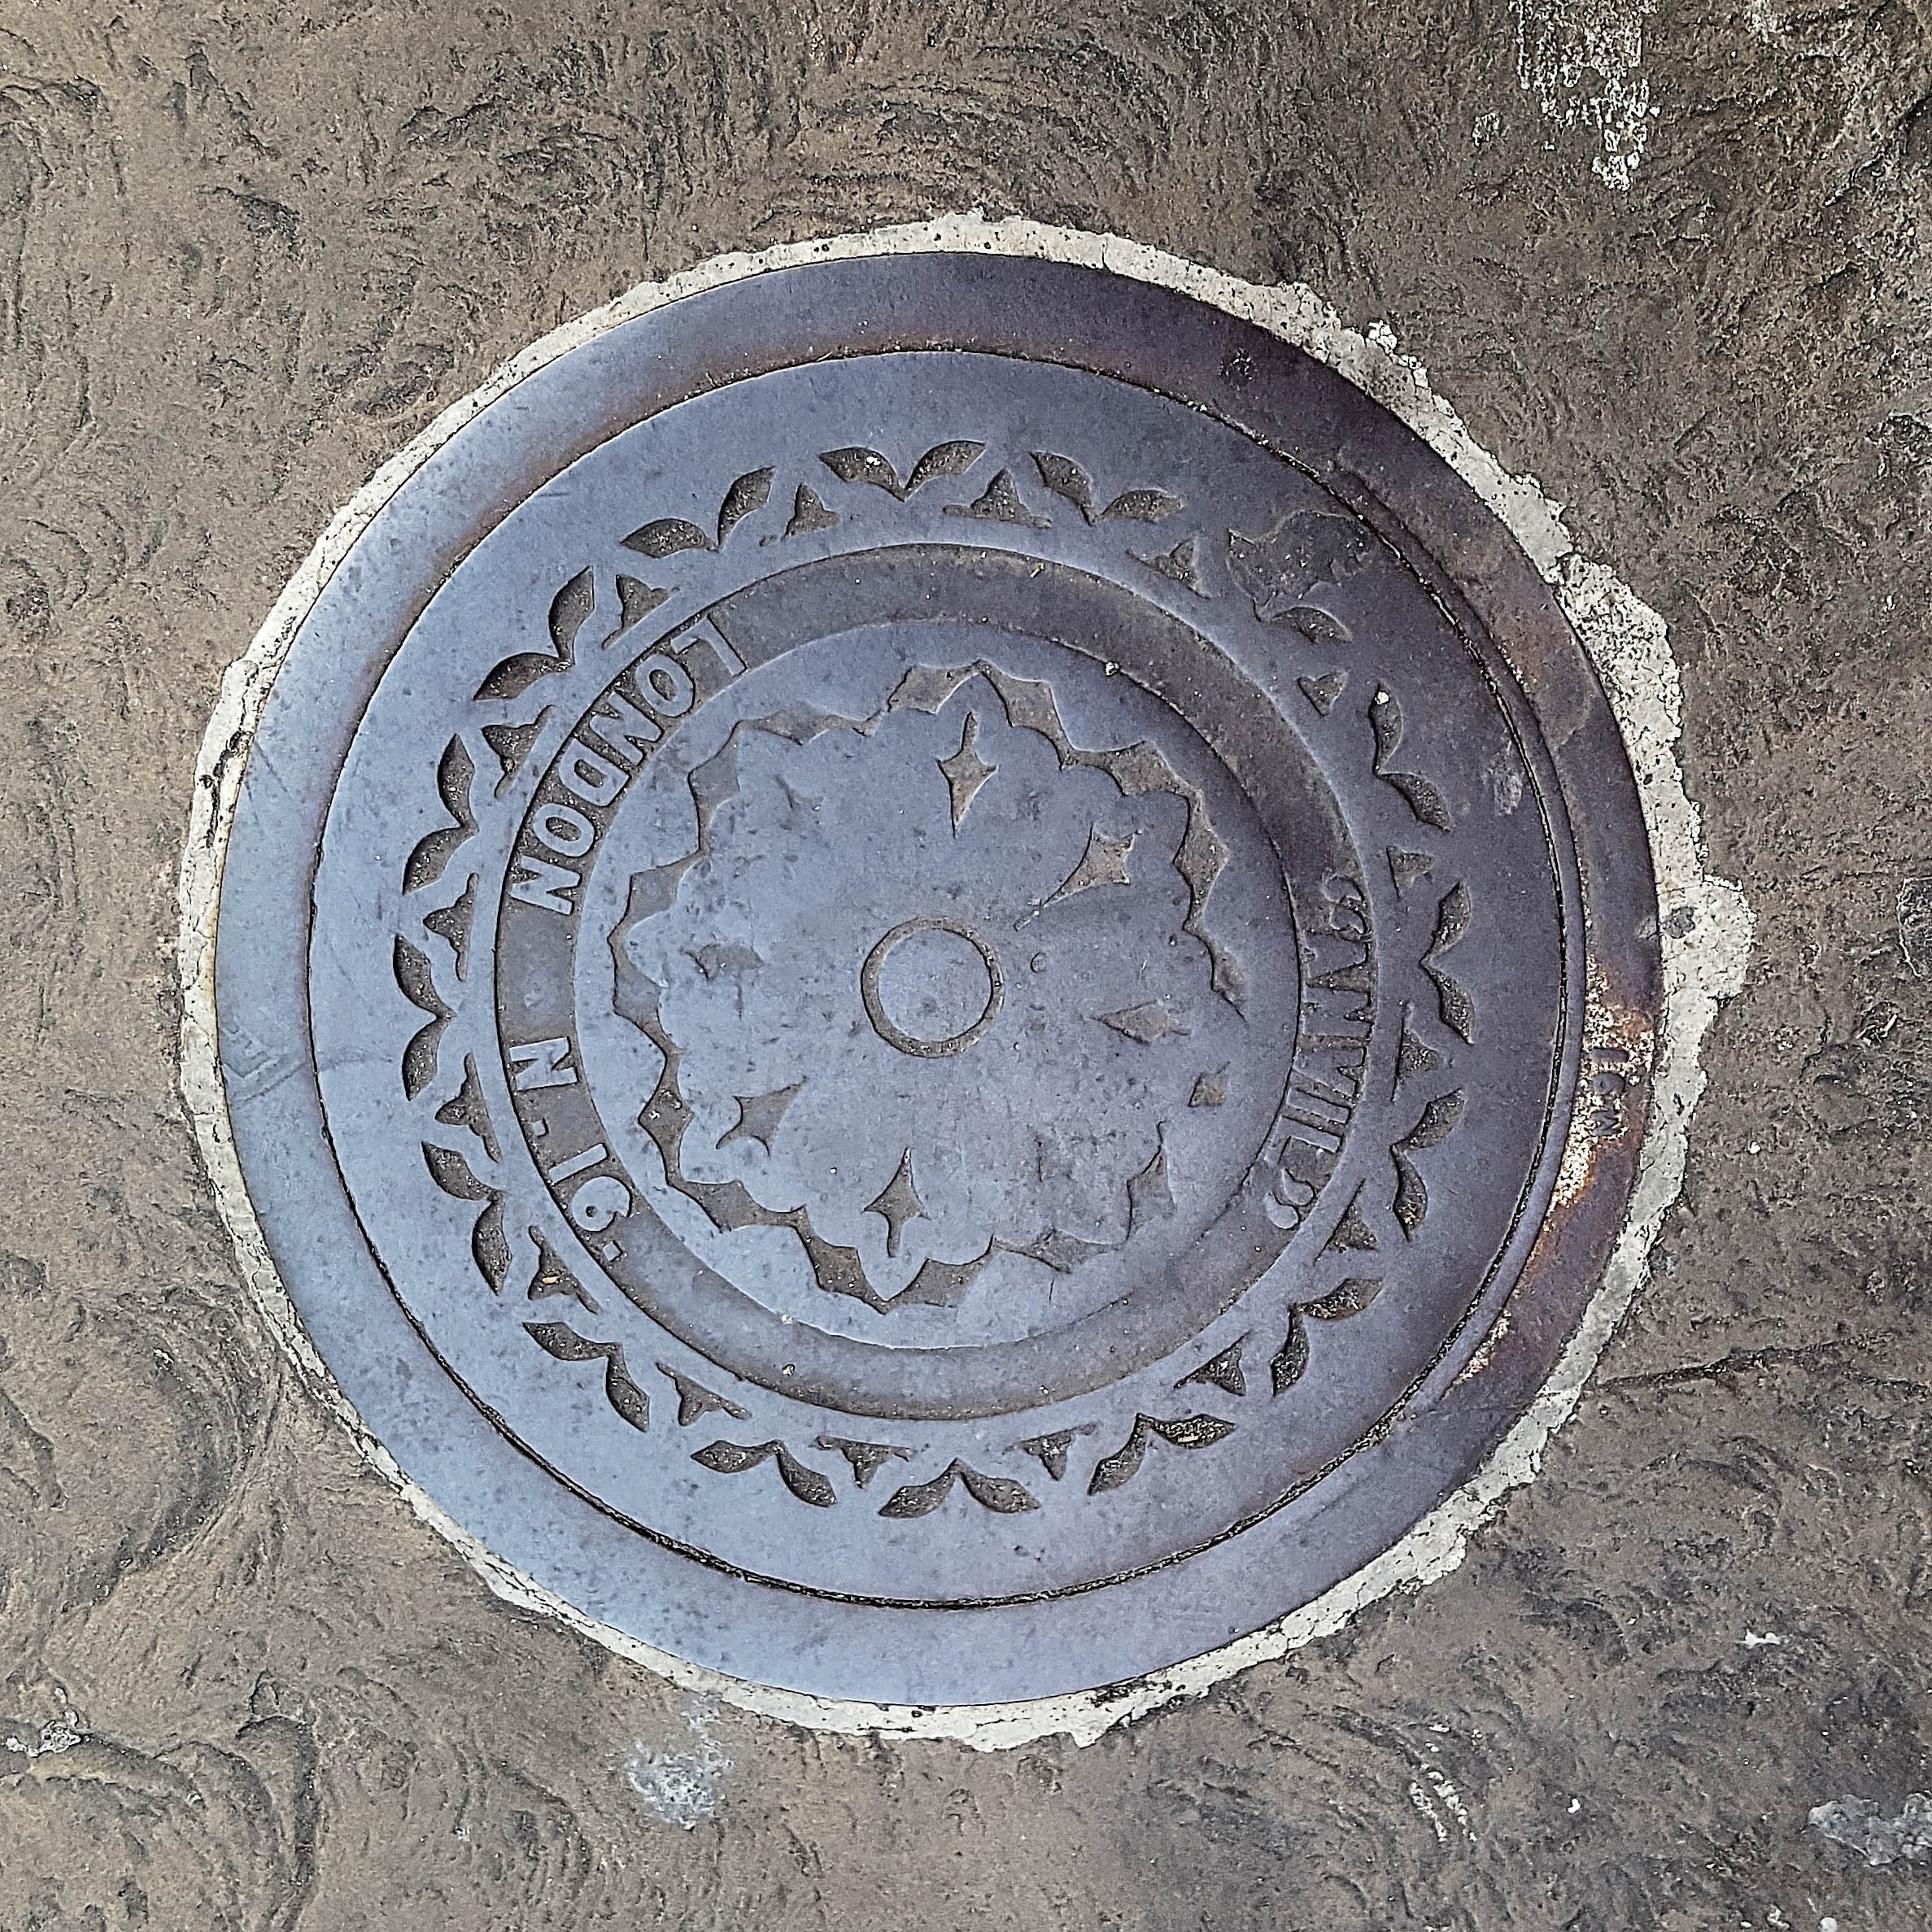 Manhole Cover, London - Cast iron with decorative circular fleur dis lis pattern